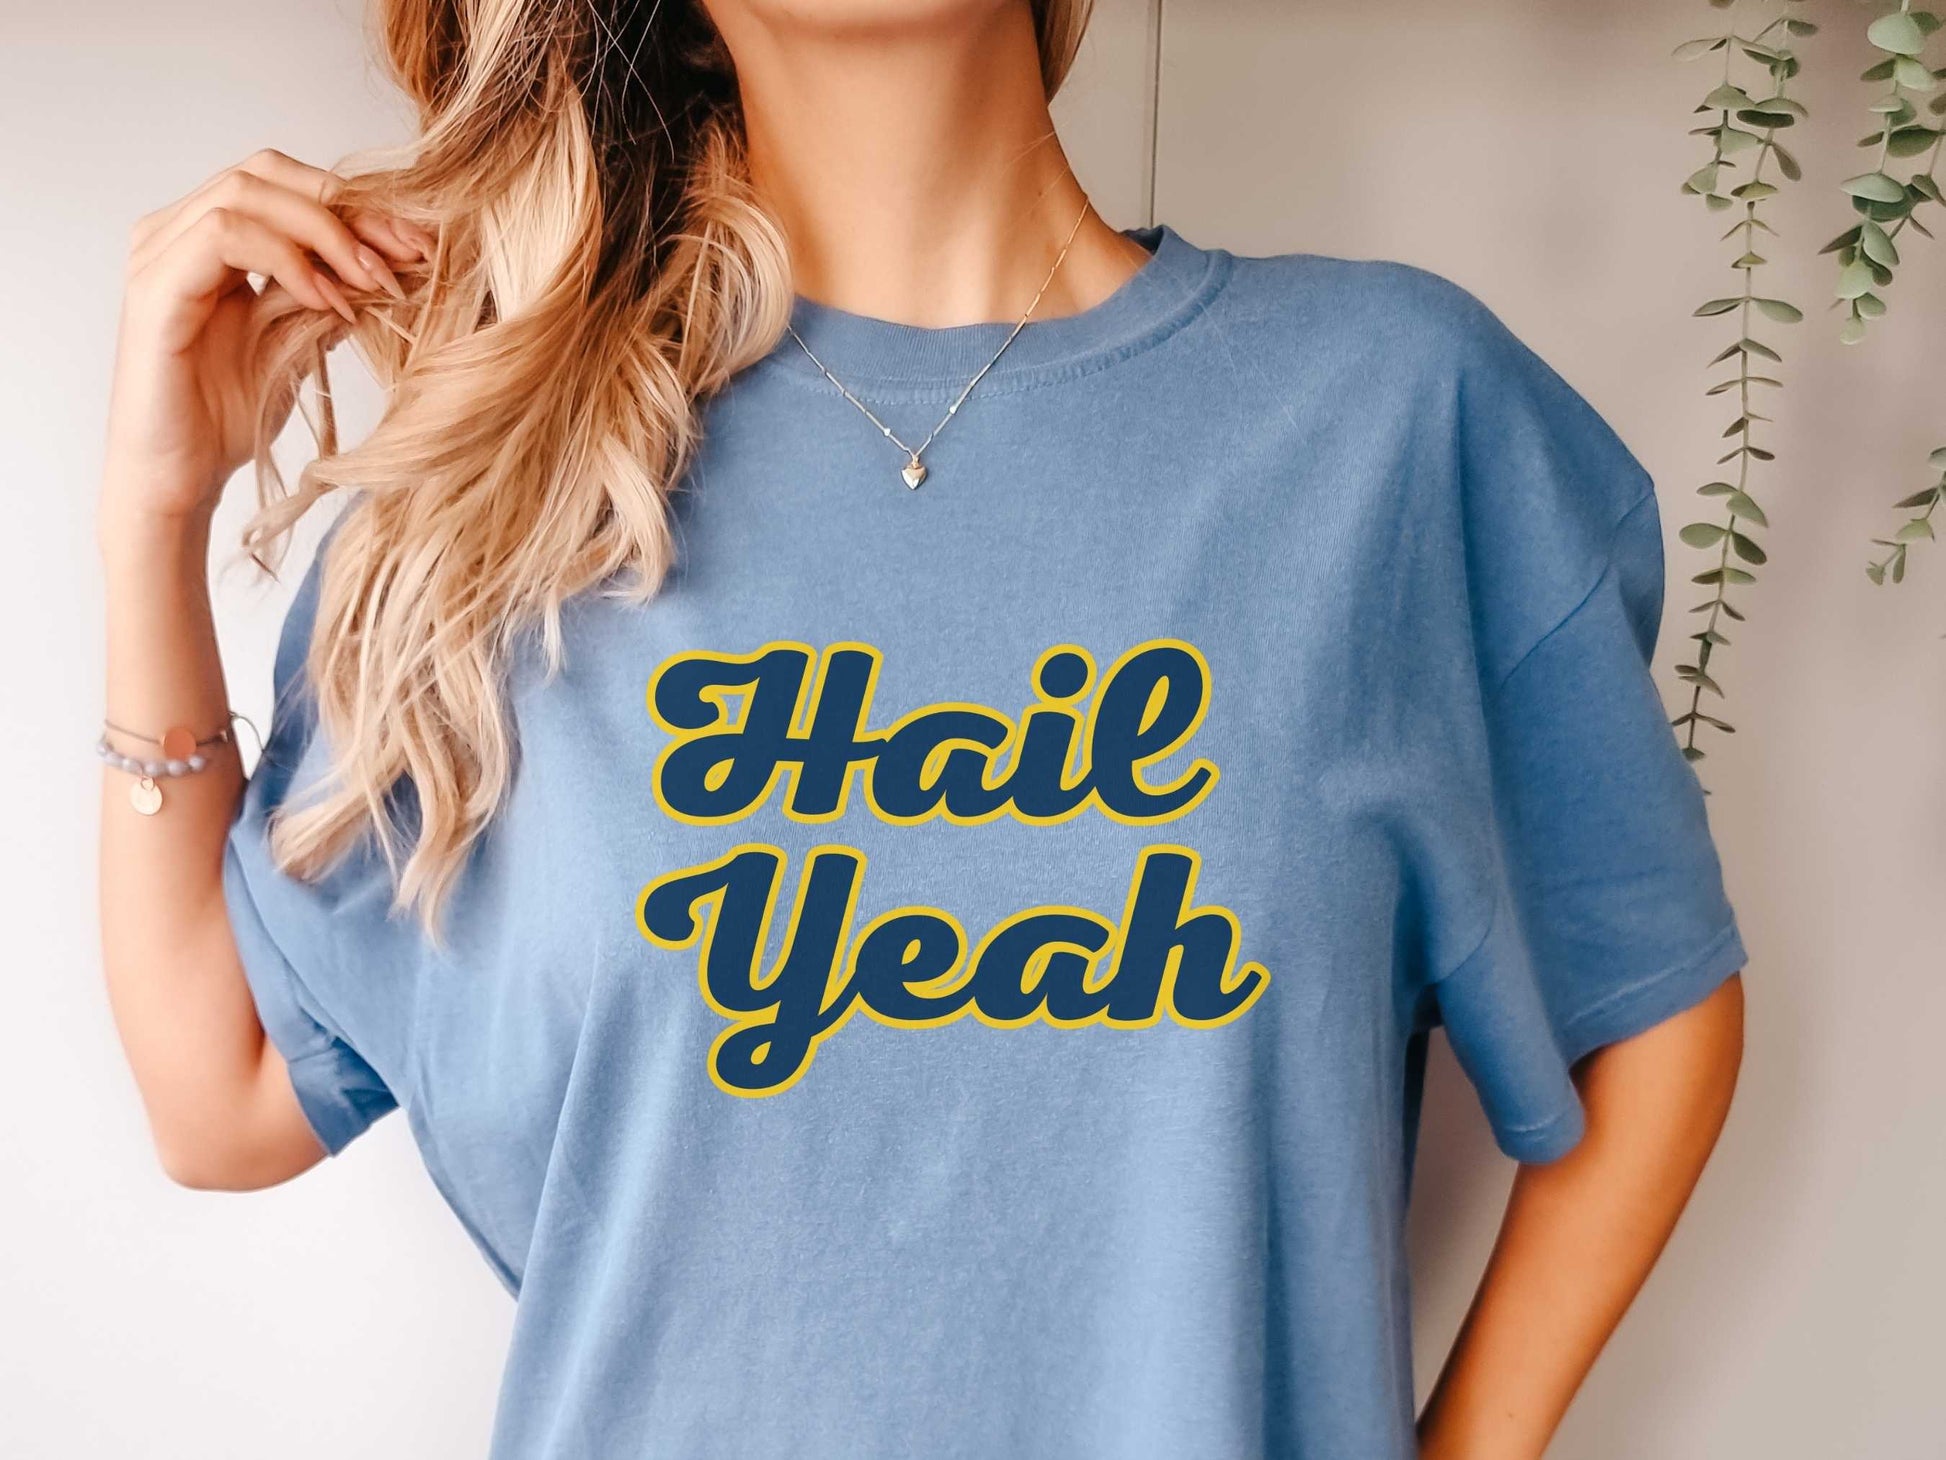 U of M "Hail Yeah" T-Shirt in Blue Jean